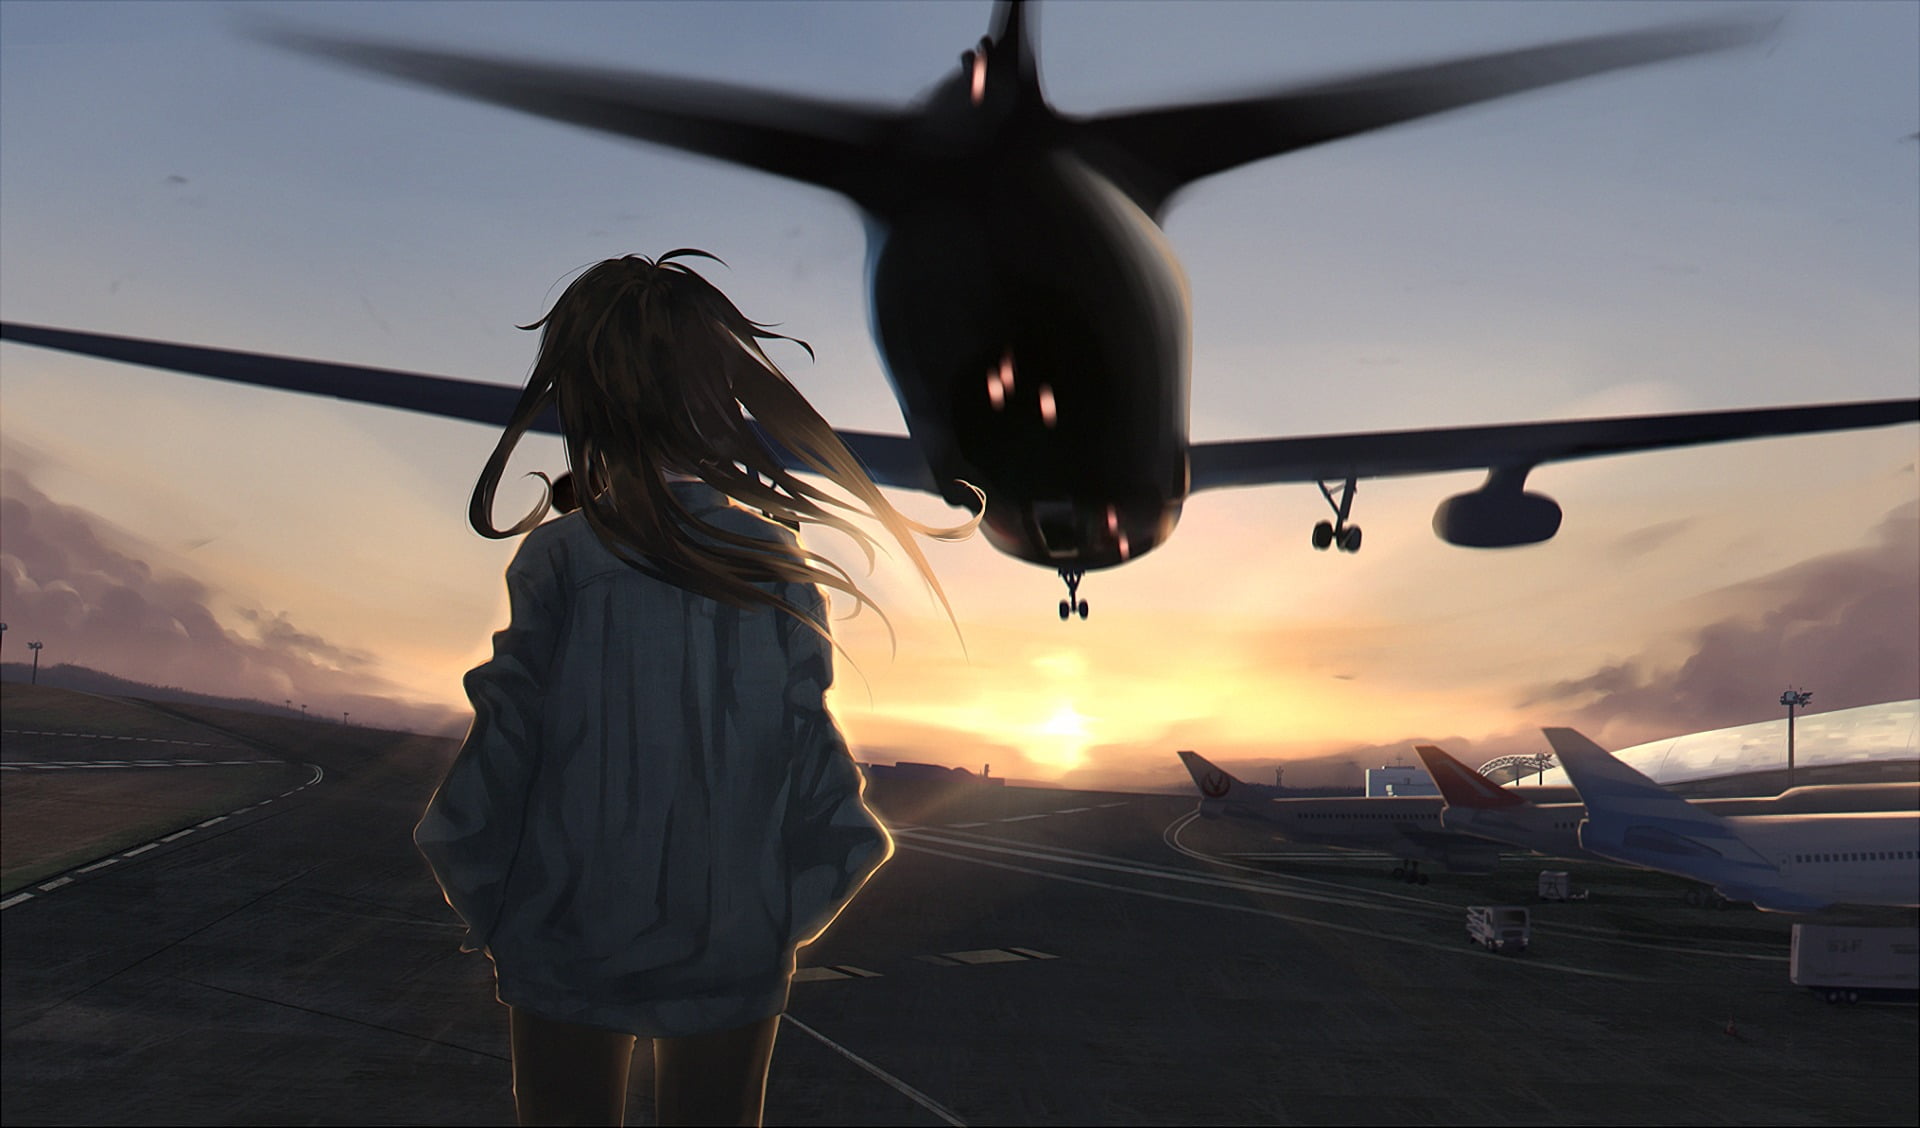 anime girls, airport, planes, sunset, sky, transportation, mode of transportation